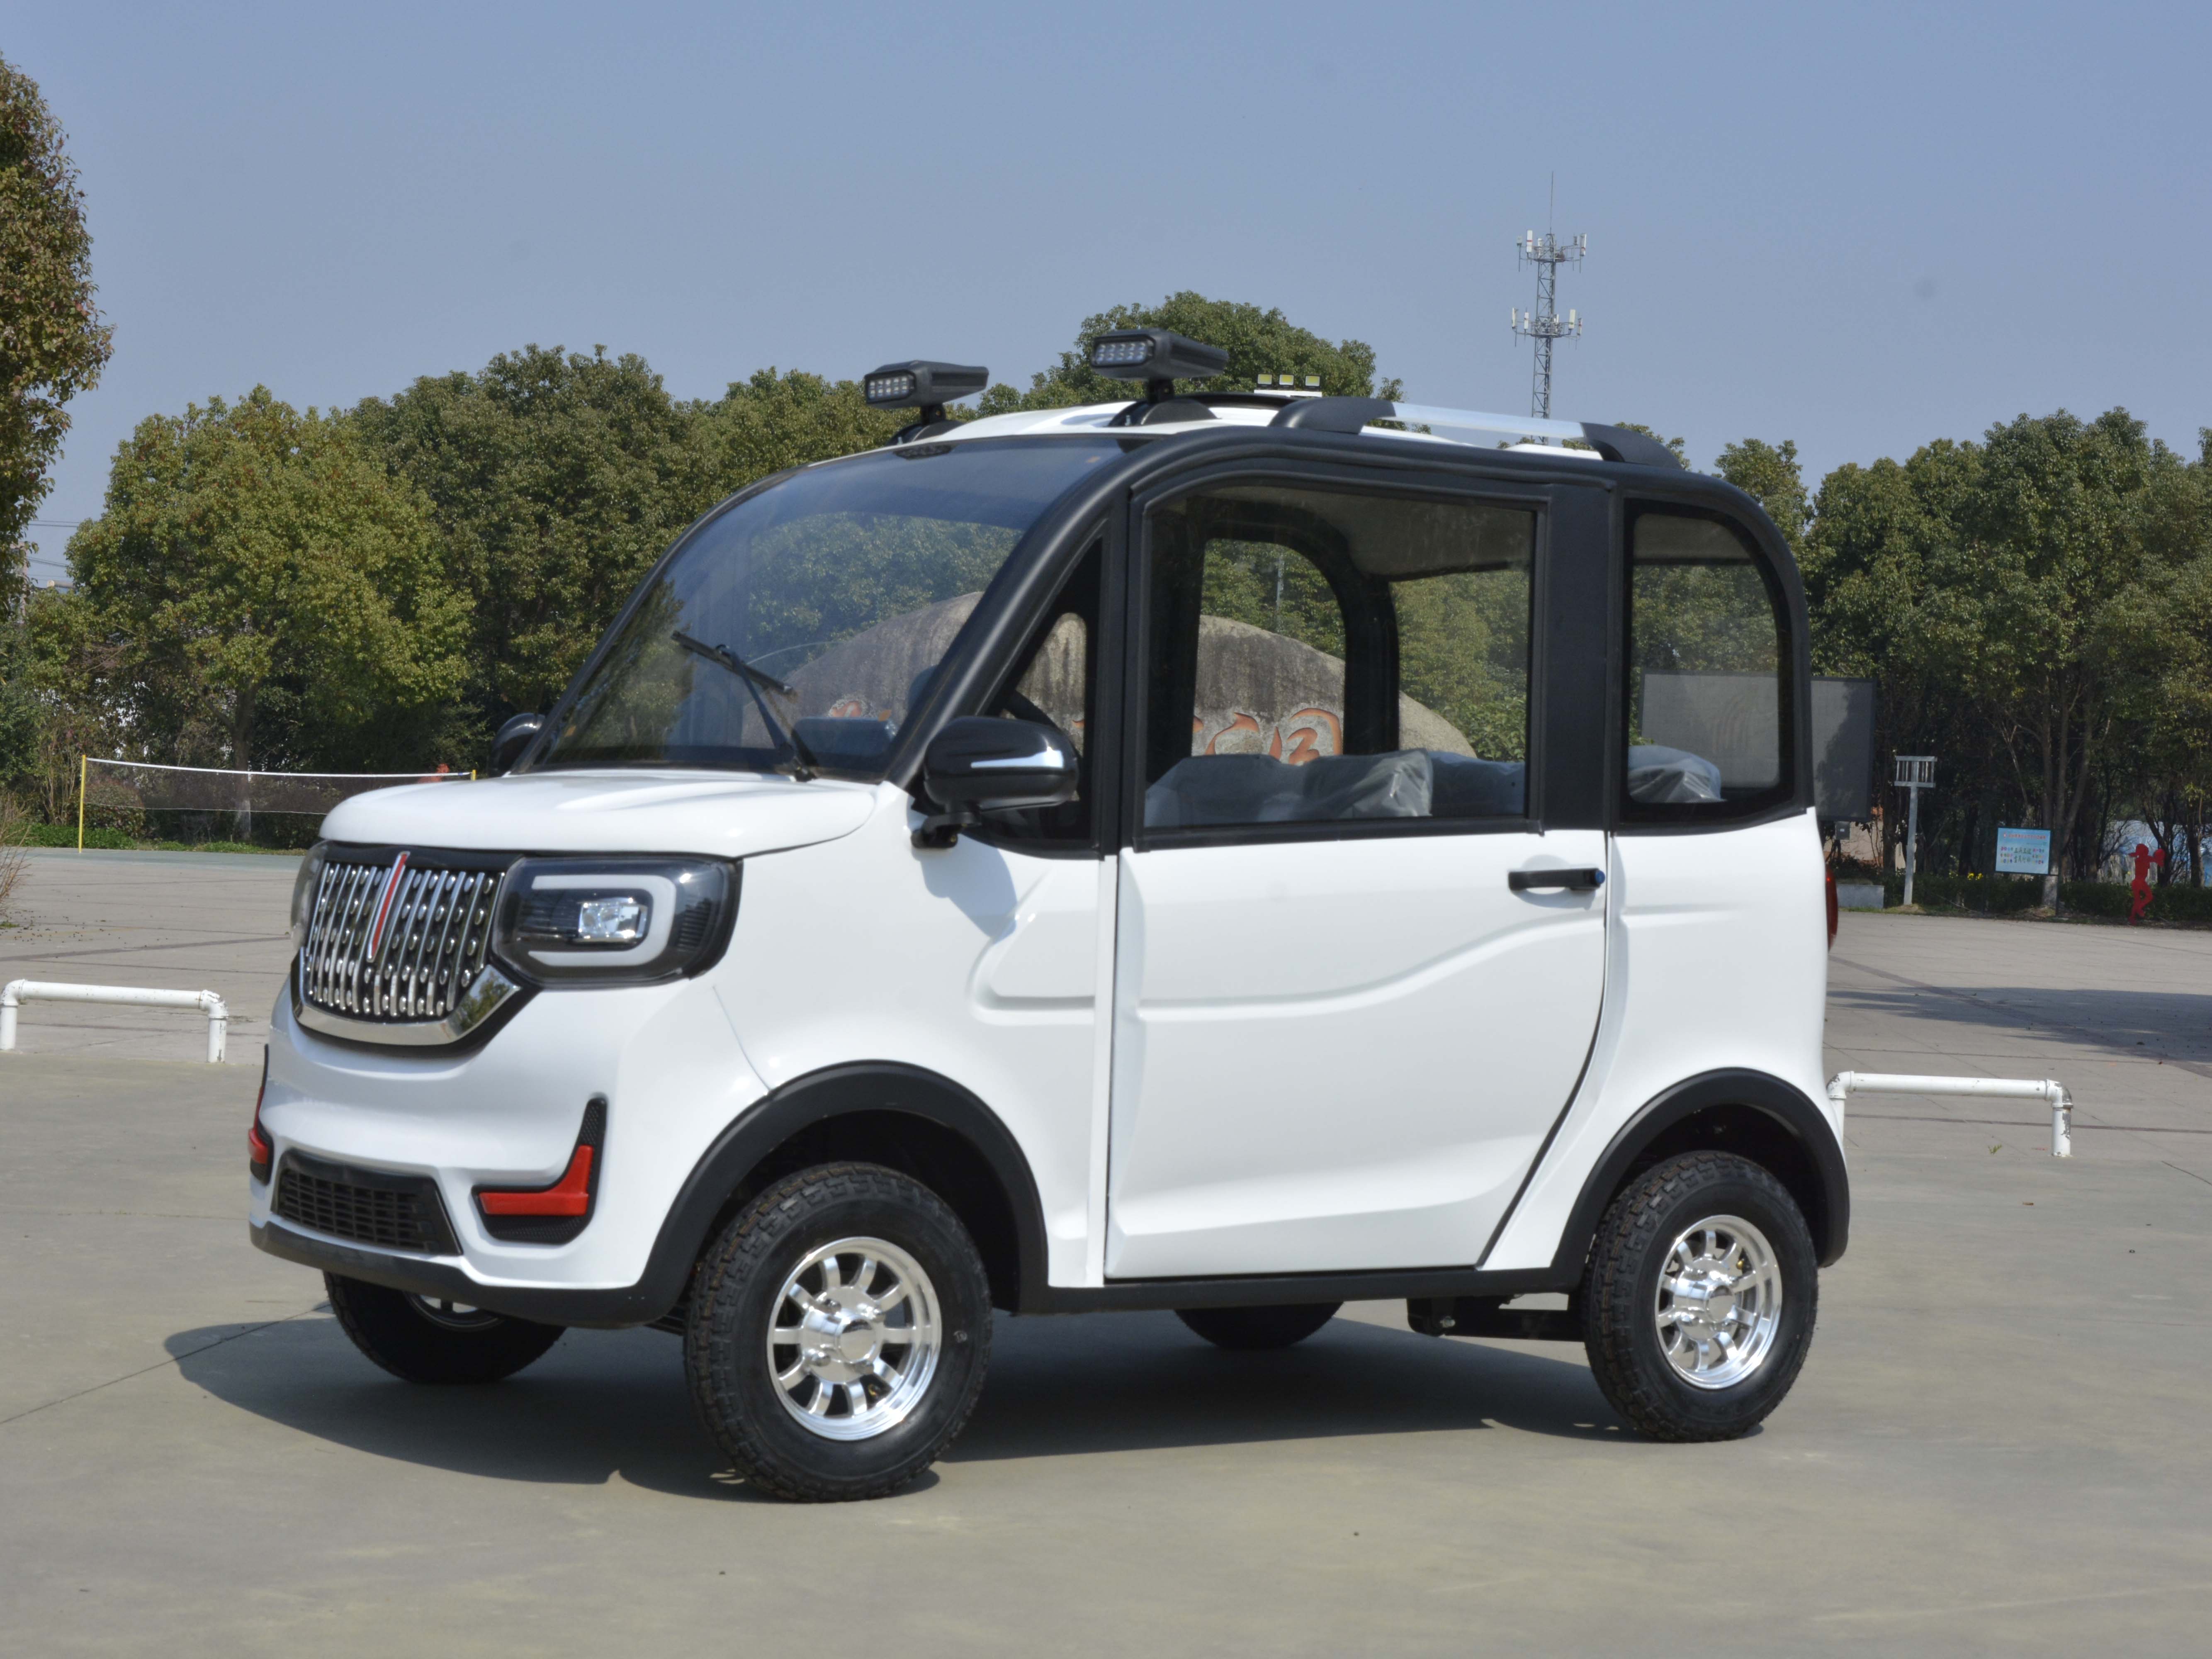 Mini electric car, knowledge introduction 常州市常力车辆厂